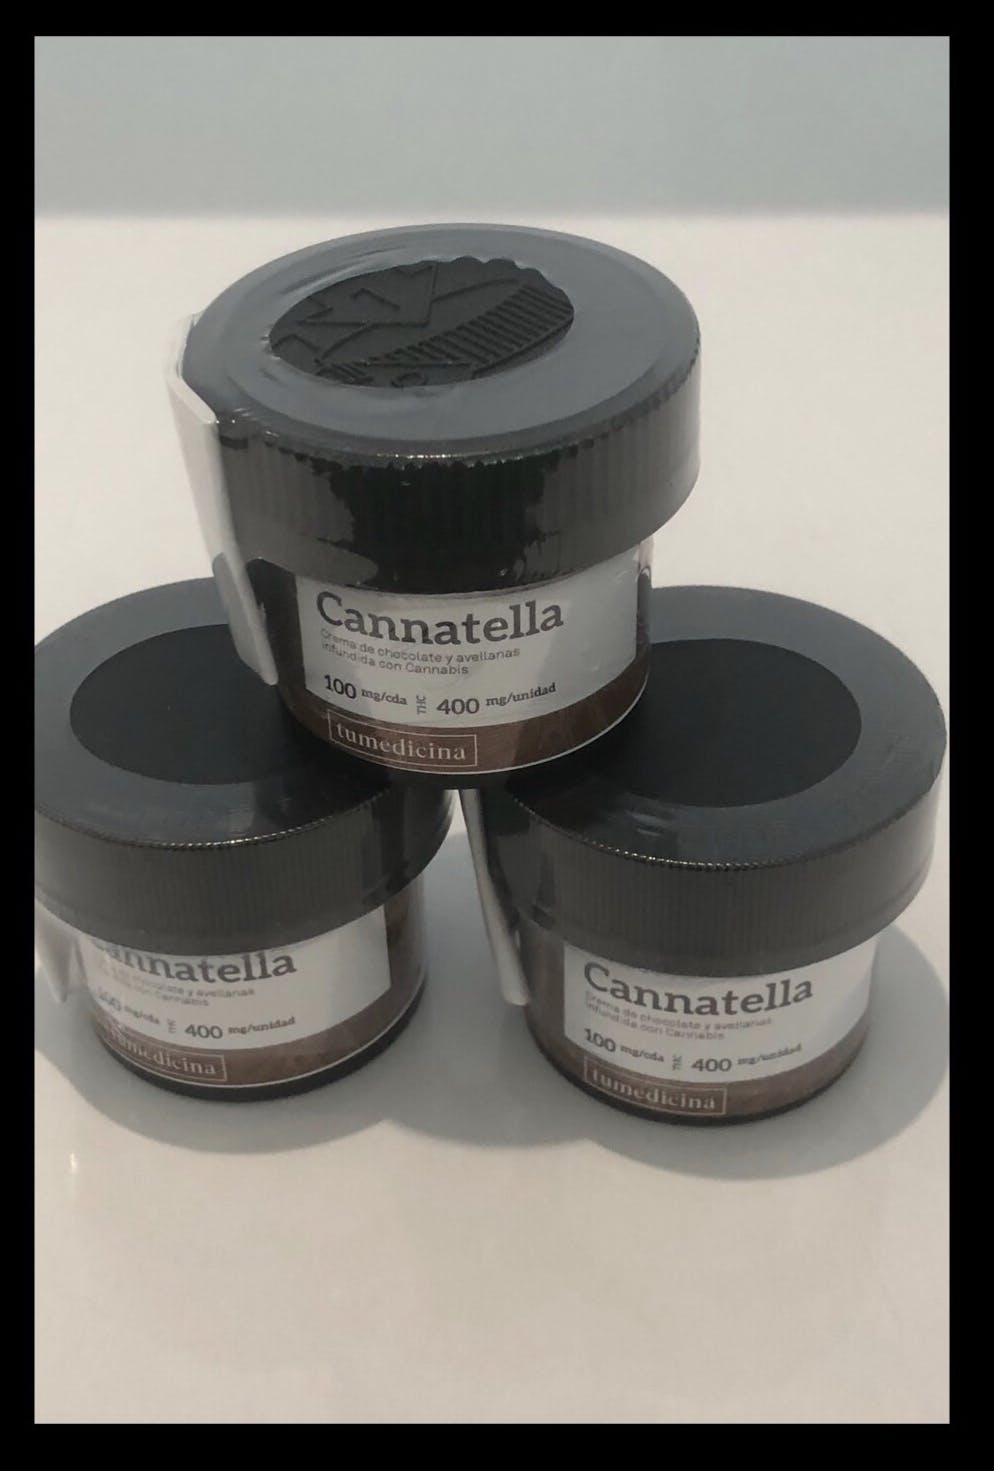 edible-cannatella-400mg-2450-00